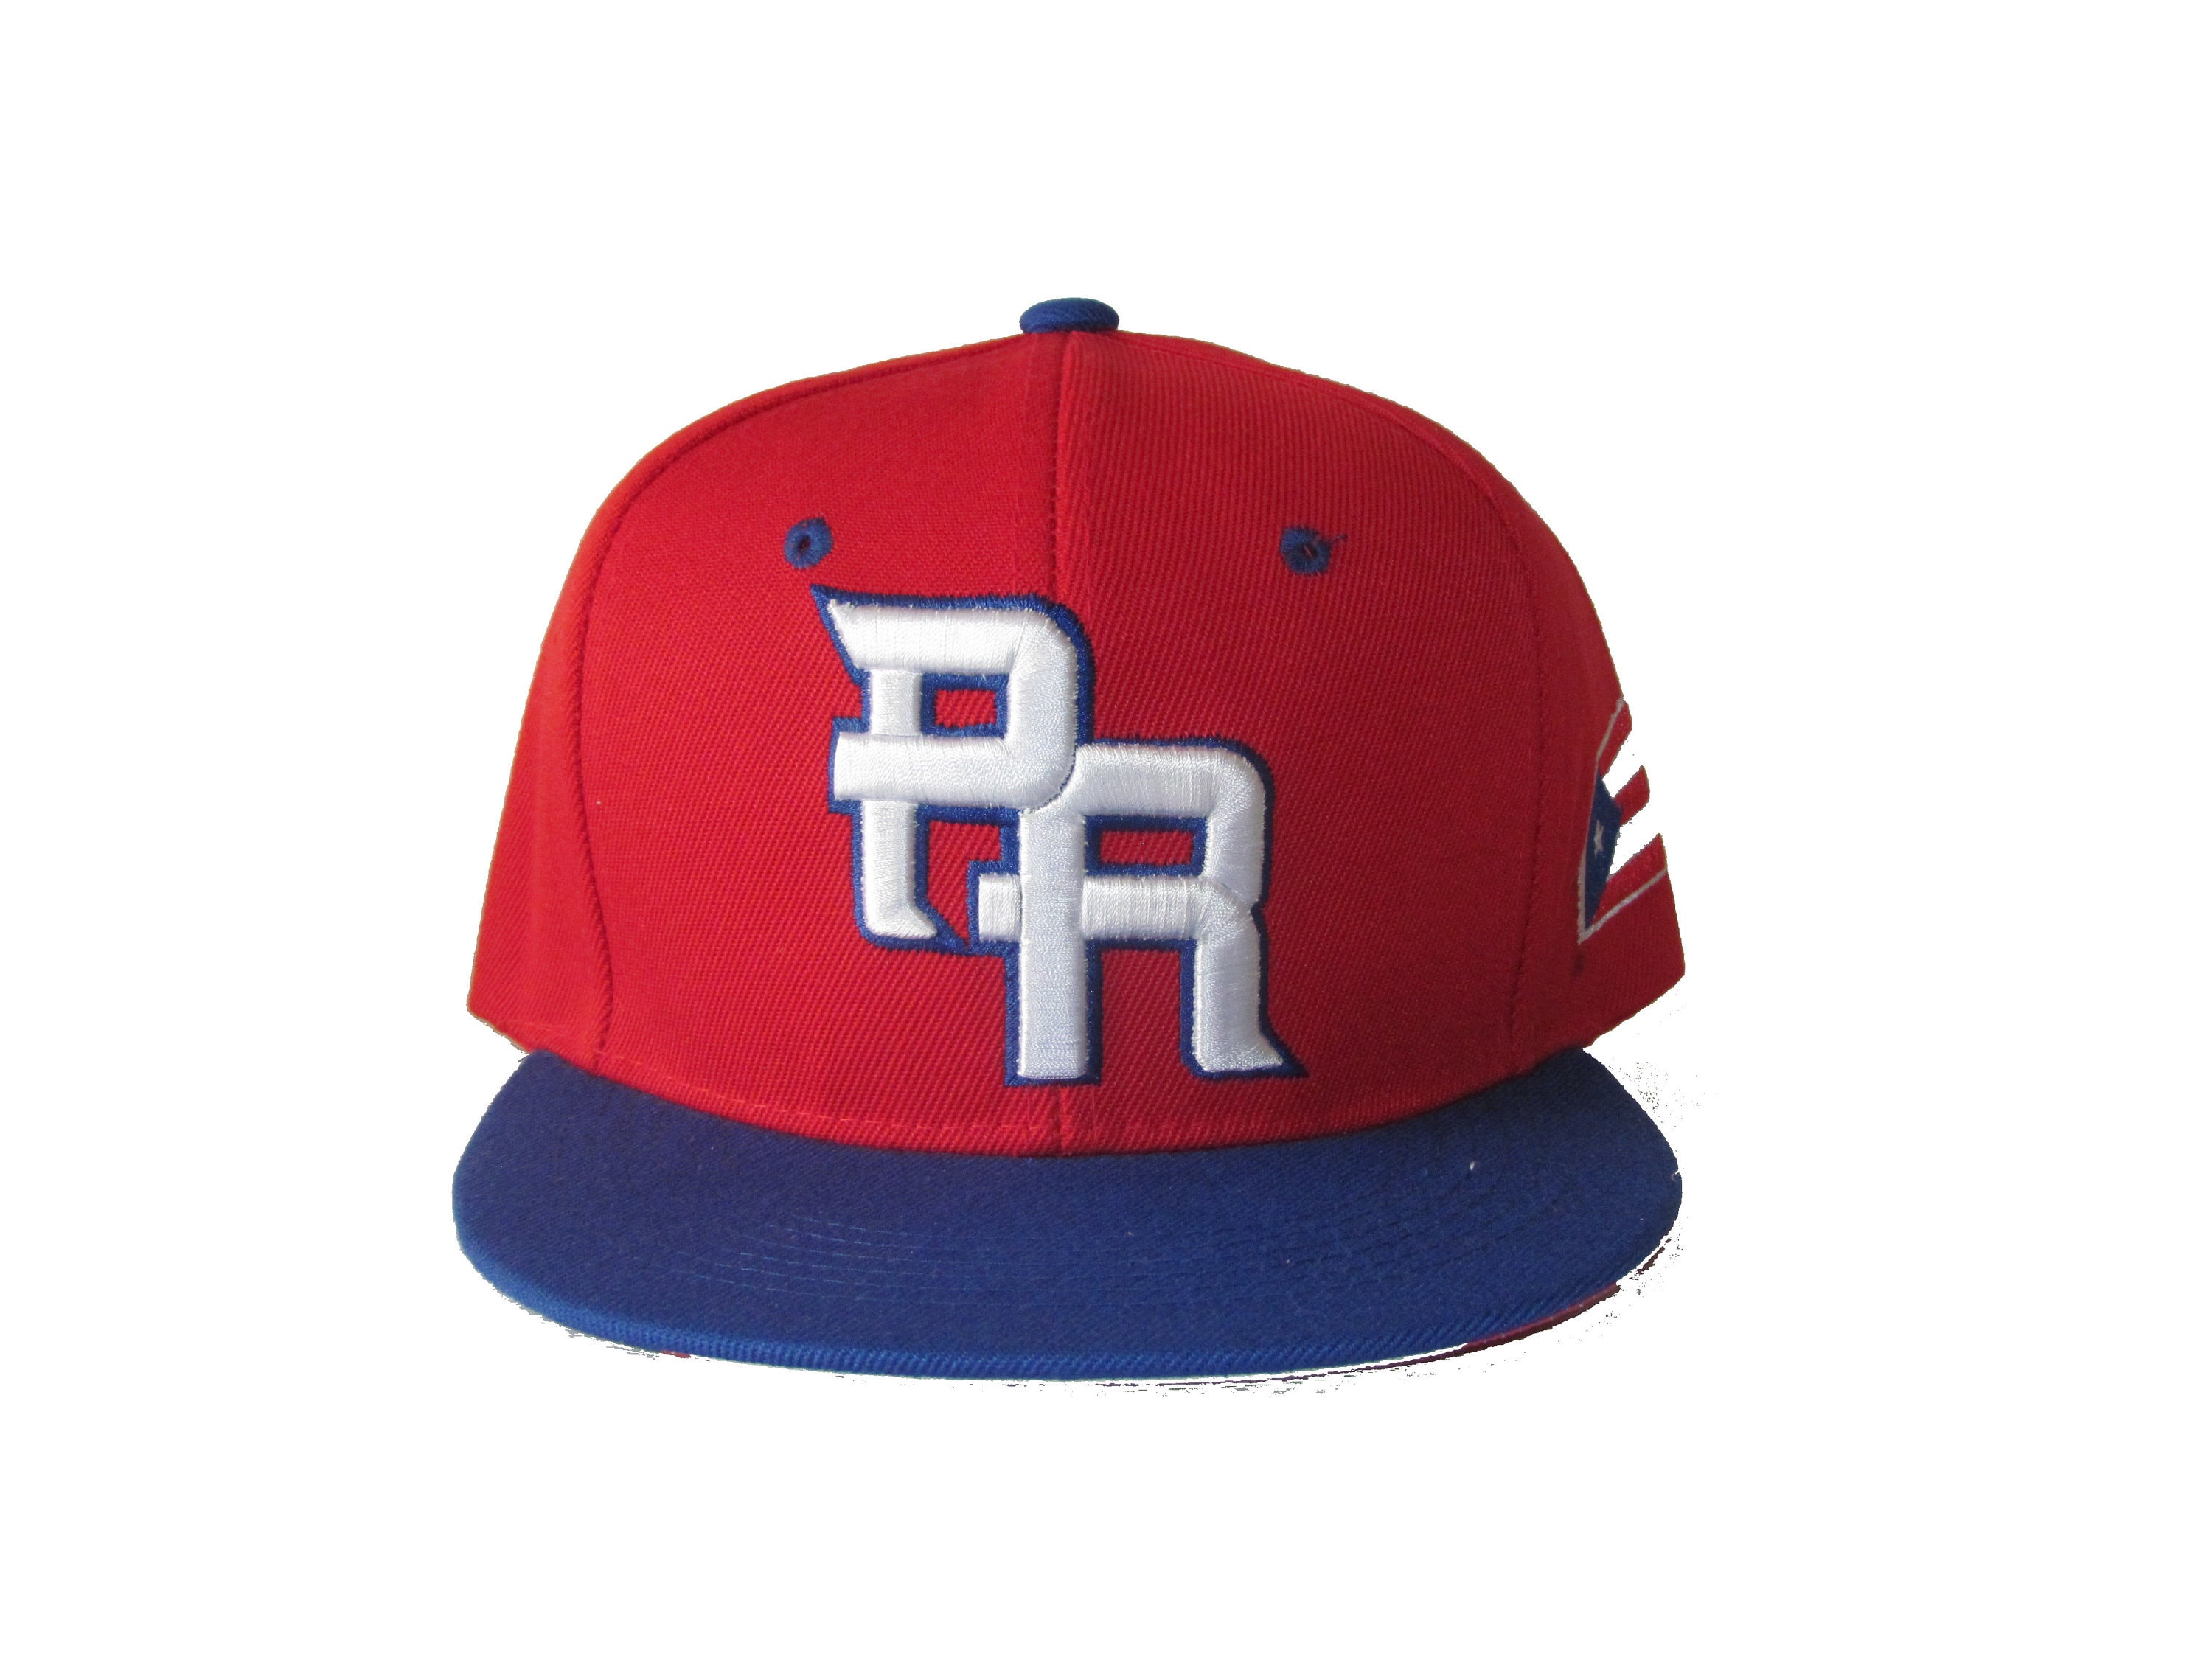 Puerto Rico Snapback Caps With Flag Printed Under Visor PR 